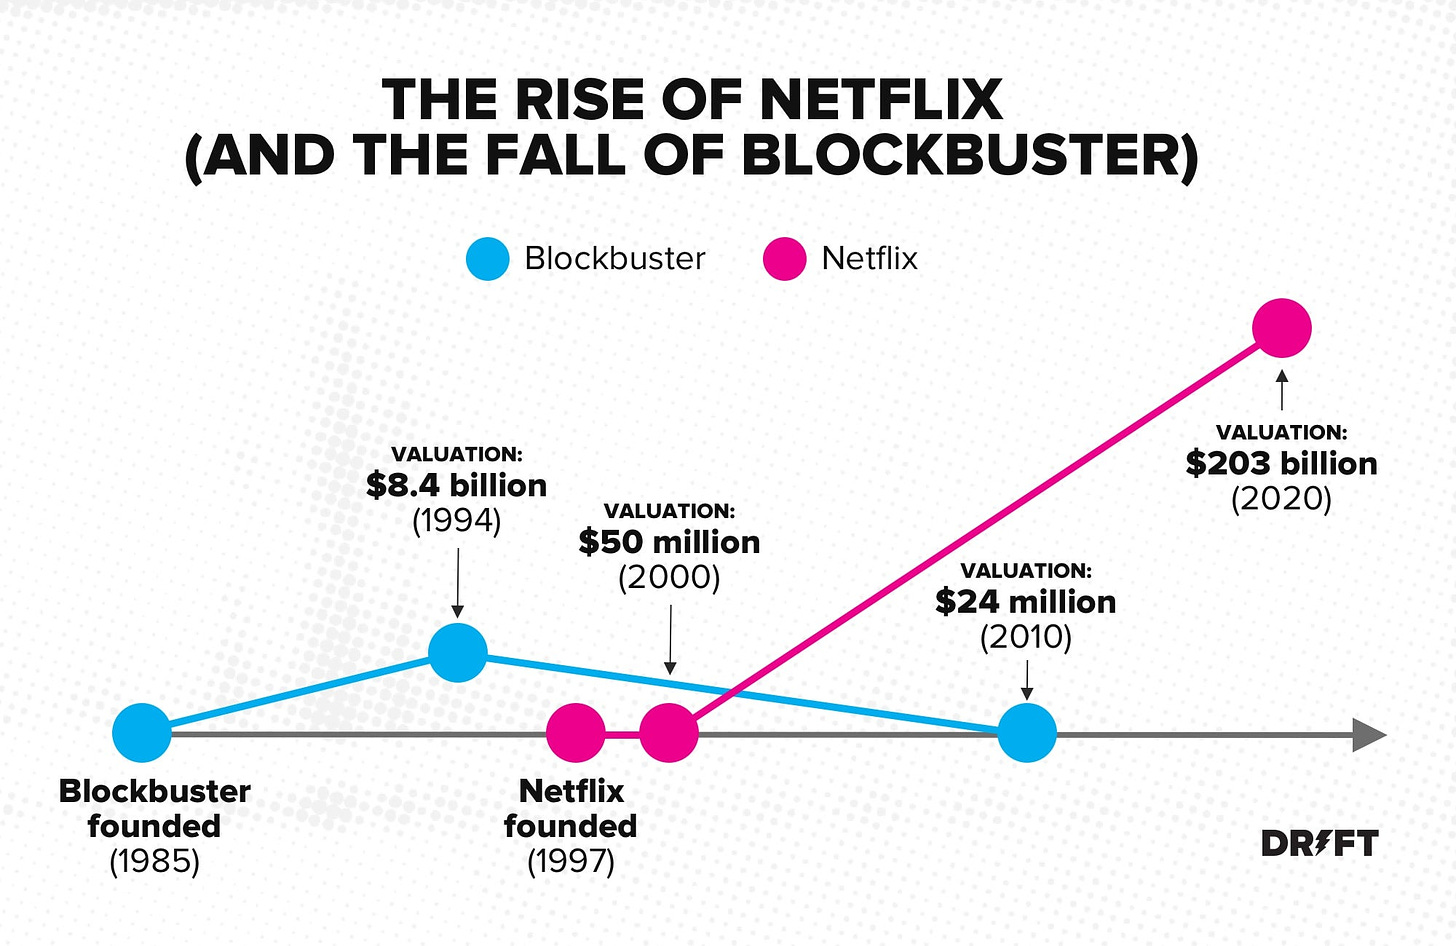 Netflix vs Blockbuster - The Official Case Study | Drift